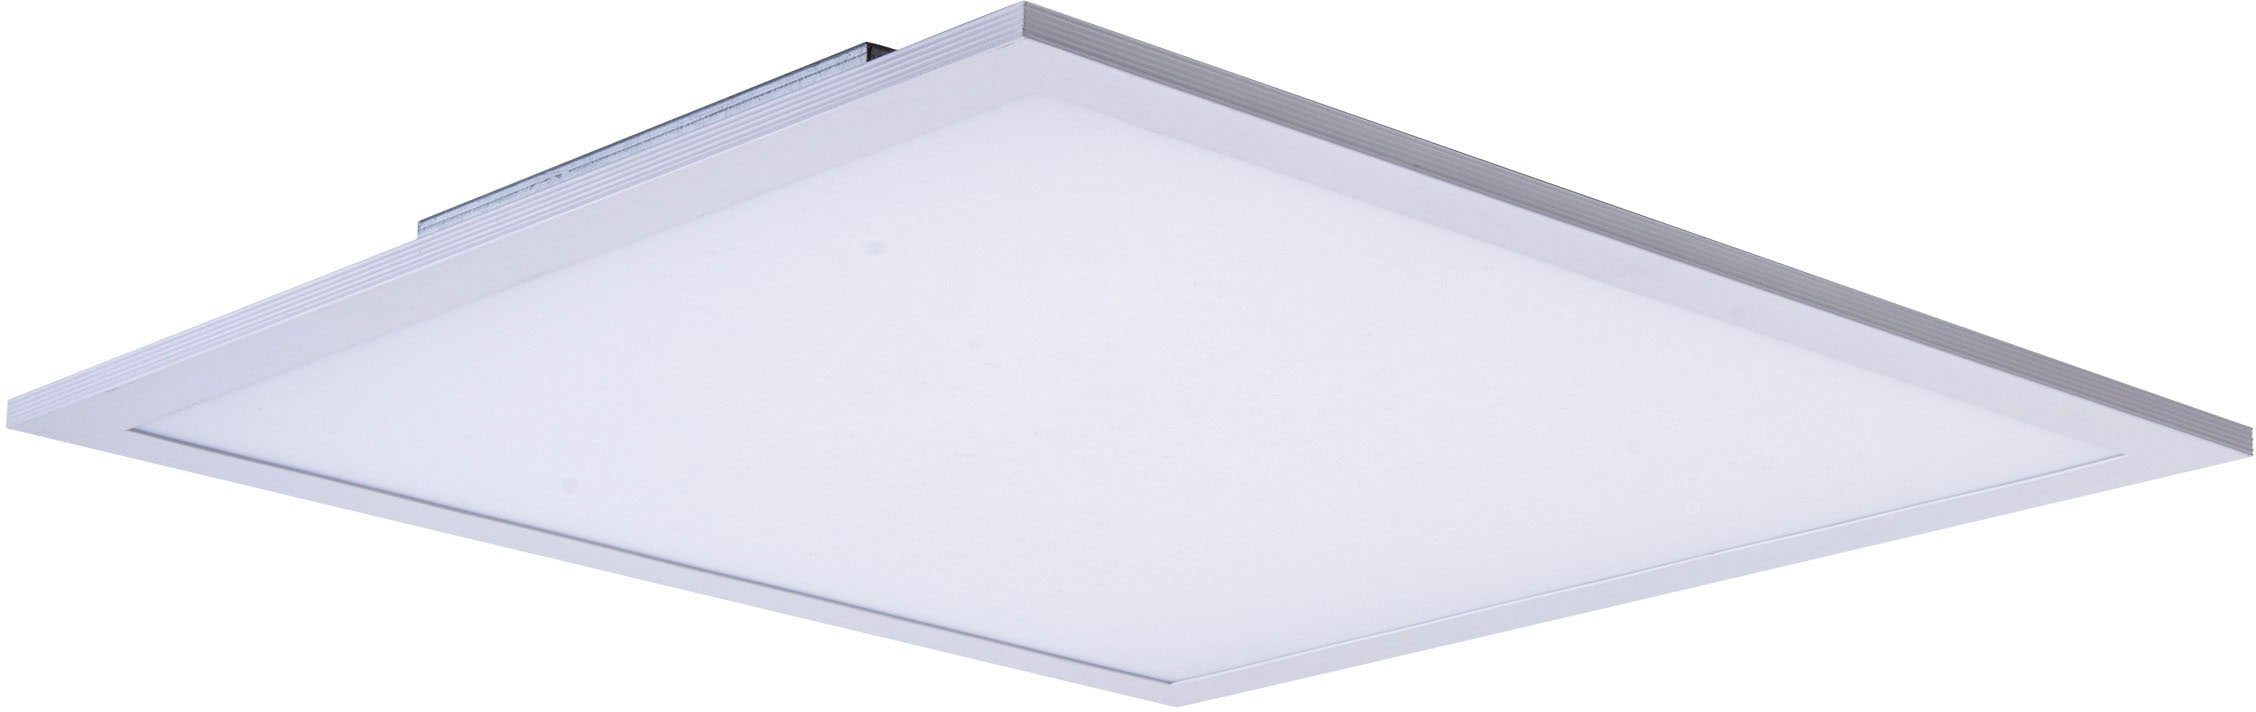 näve LED Panel »Nicola«, 1 flammig-flammig, Aufbaupanel weiß 45x45cm, H: 6cm,  120 LED, Lichtfarbe neutralweiß bei OTTO